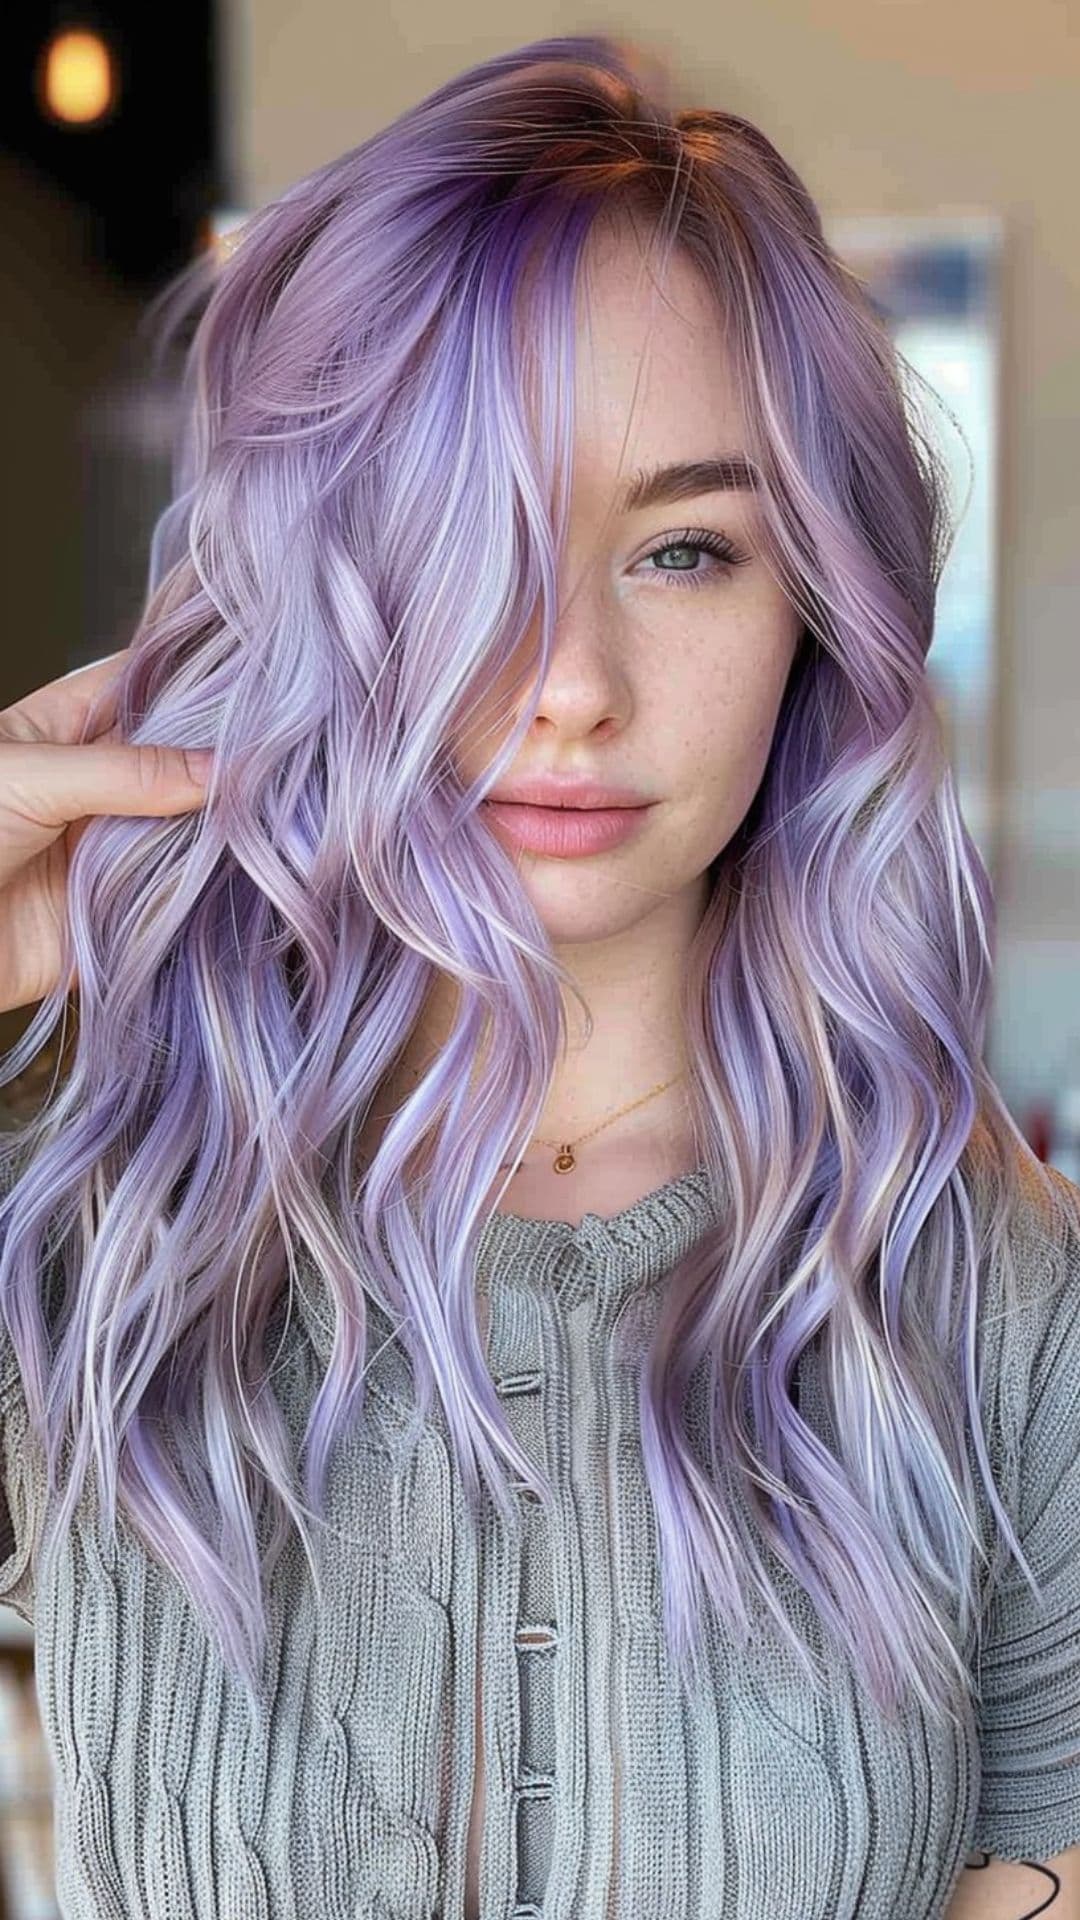 A woman modelling a silver purple hair color.